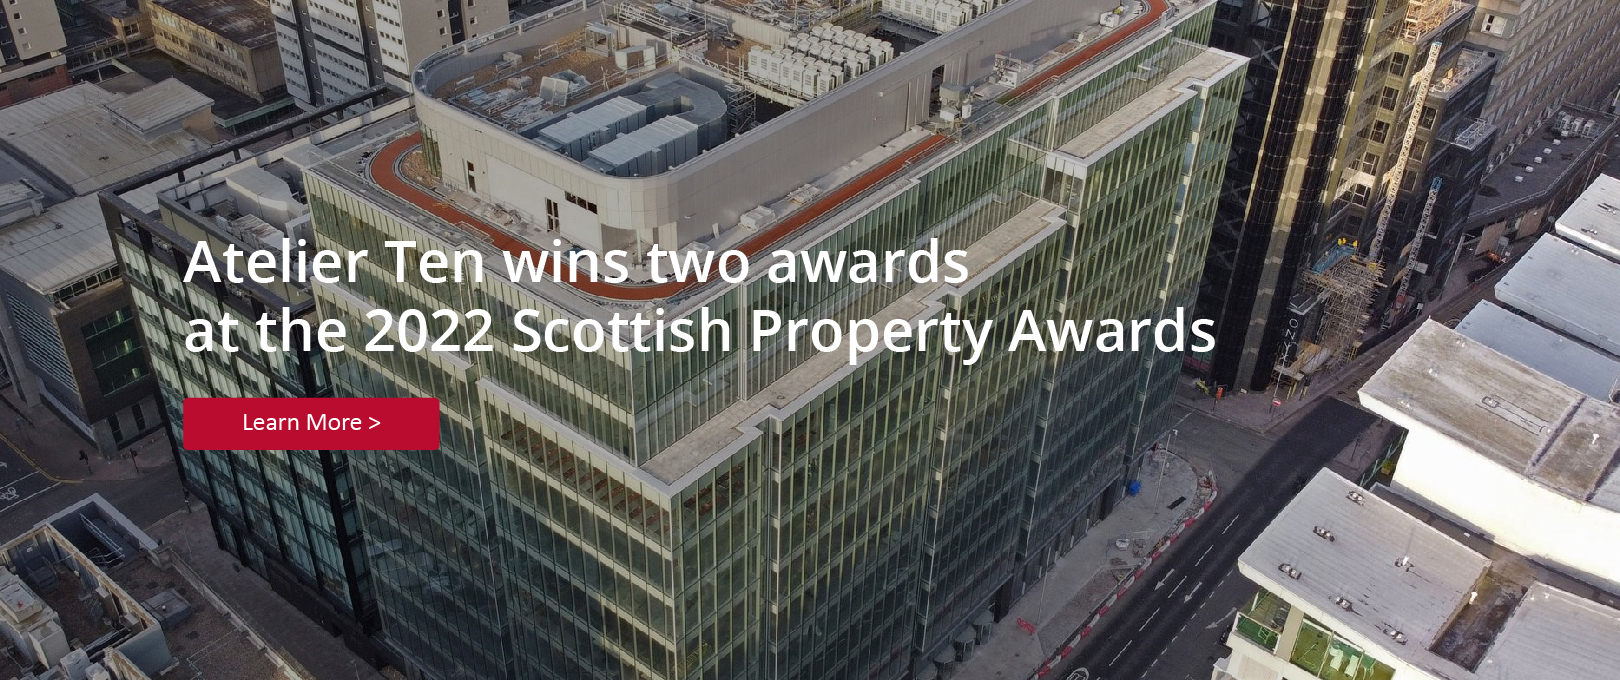 https://www.atelierten.com/2022-scottish-property-award-winners-announced/